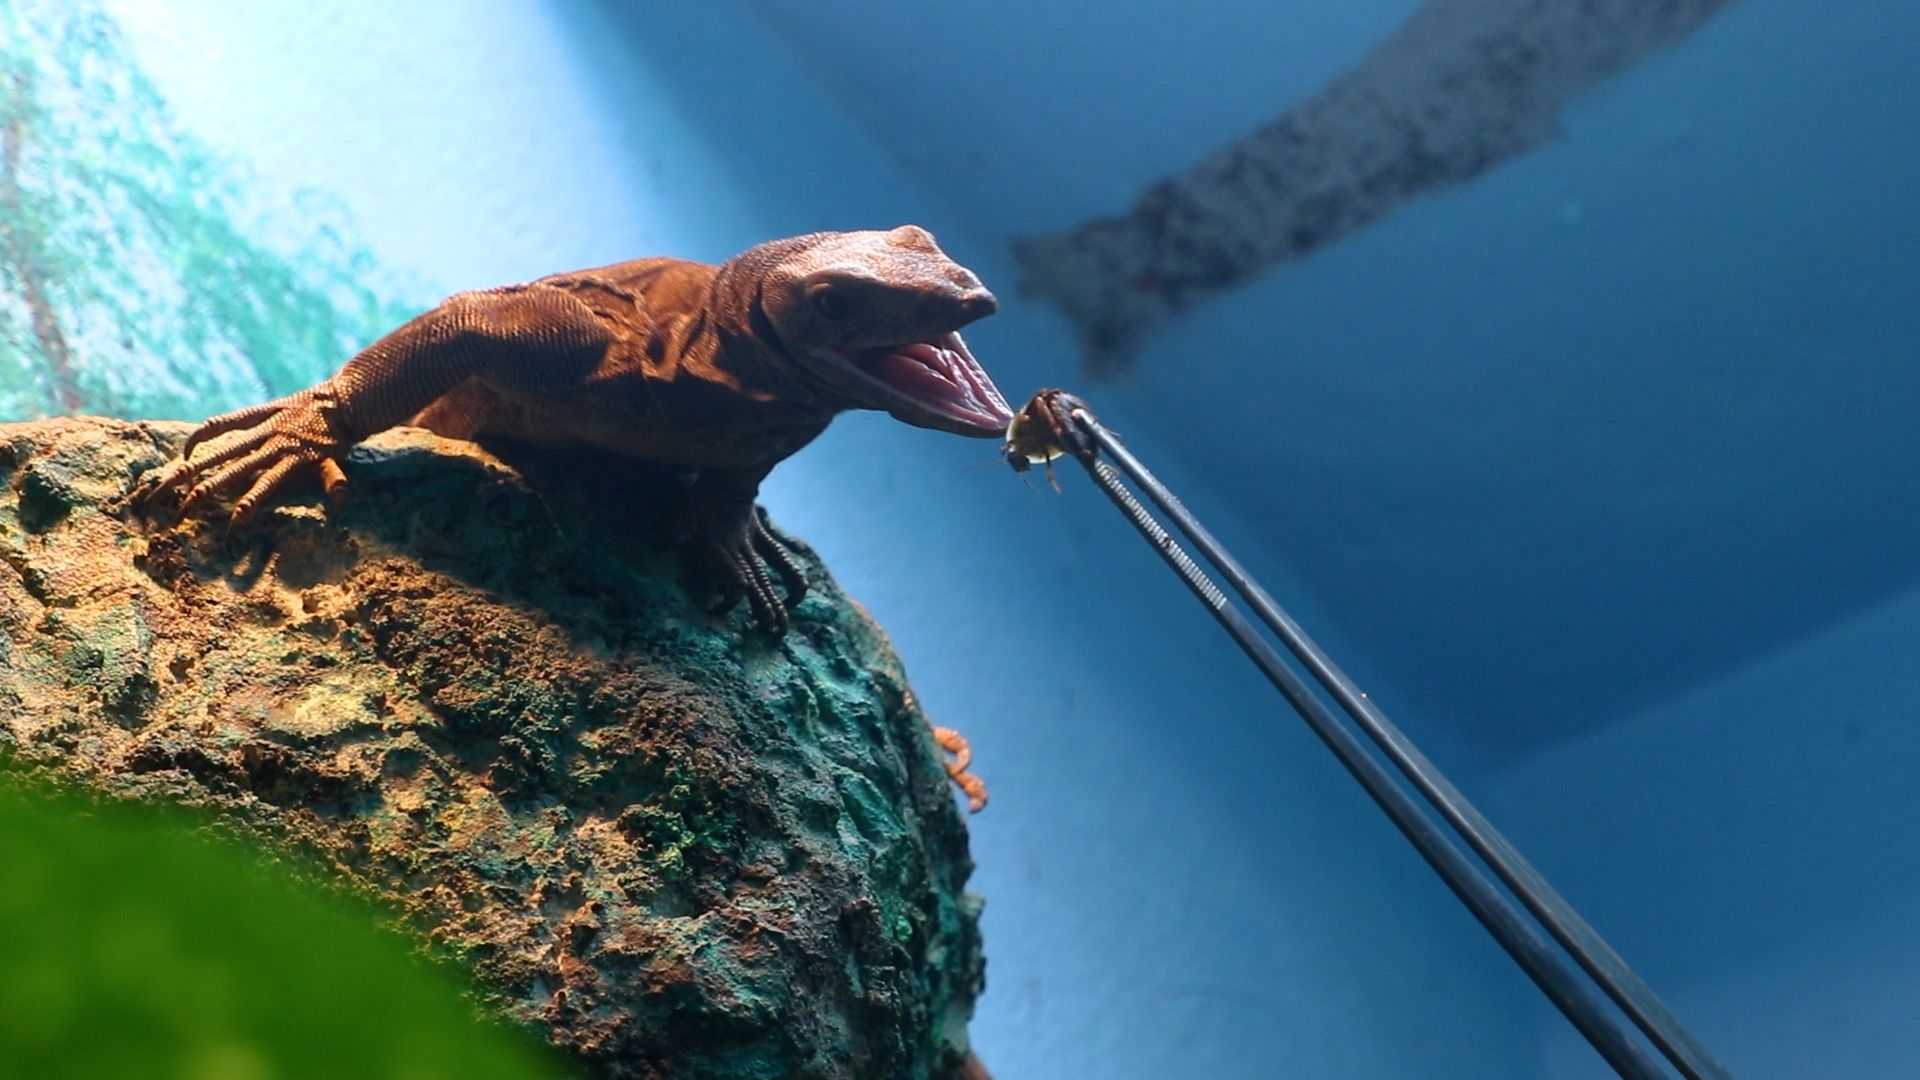 A lizard eats a roach handed to it on a stick.